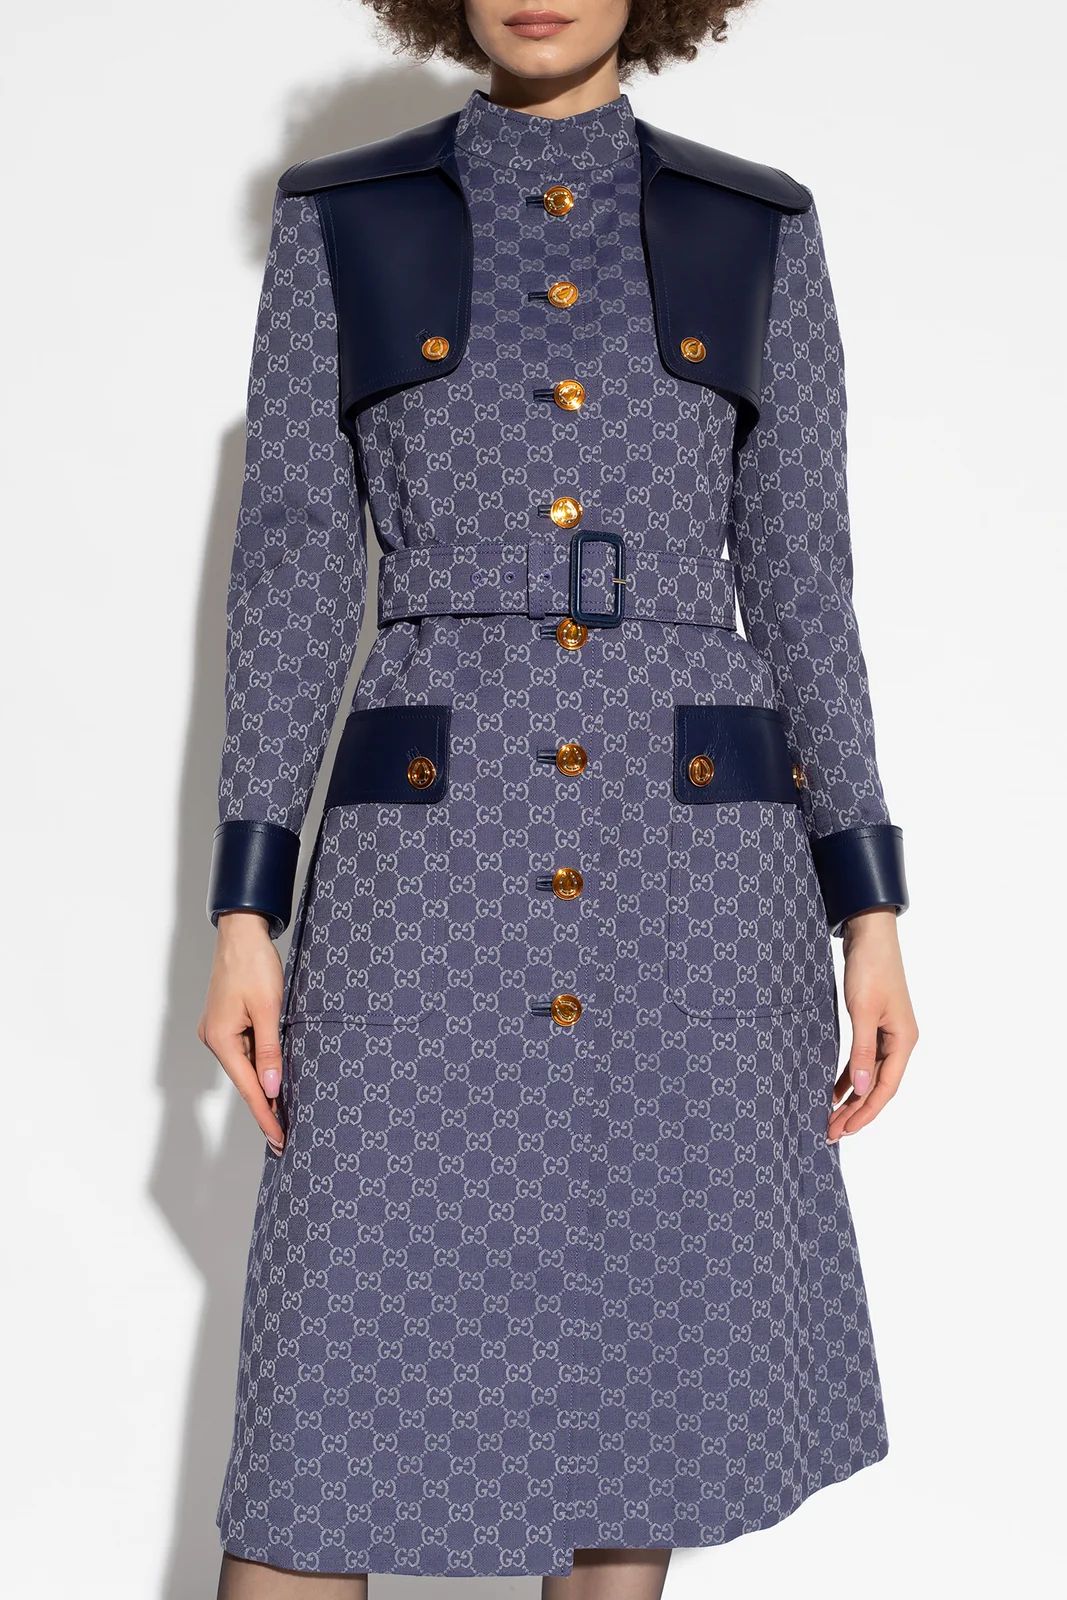 Gucci Monogrammed Coat | Cettire Global